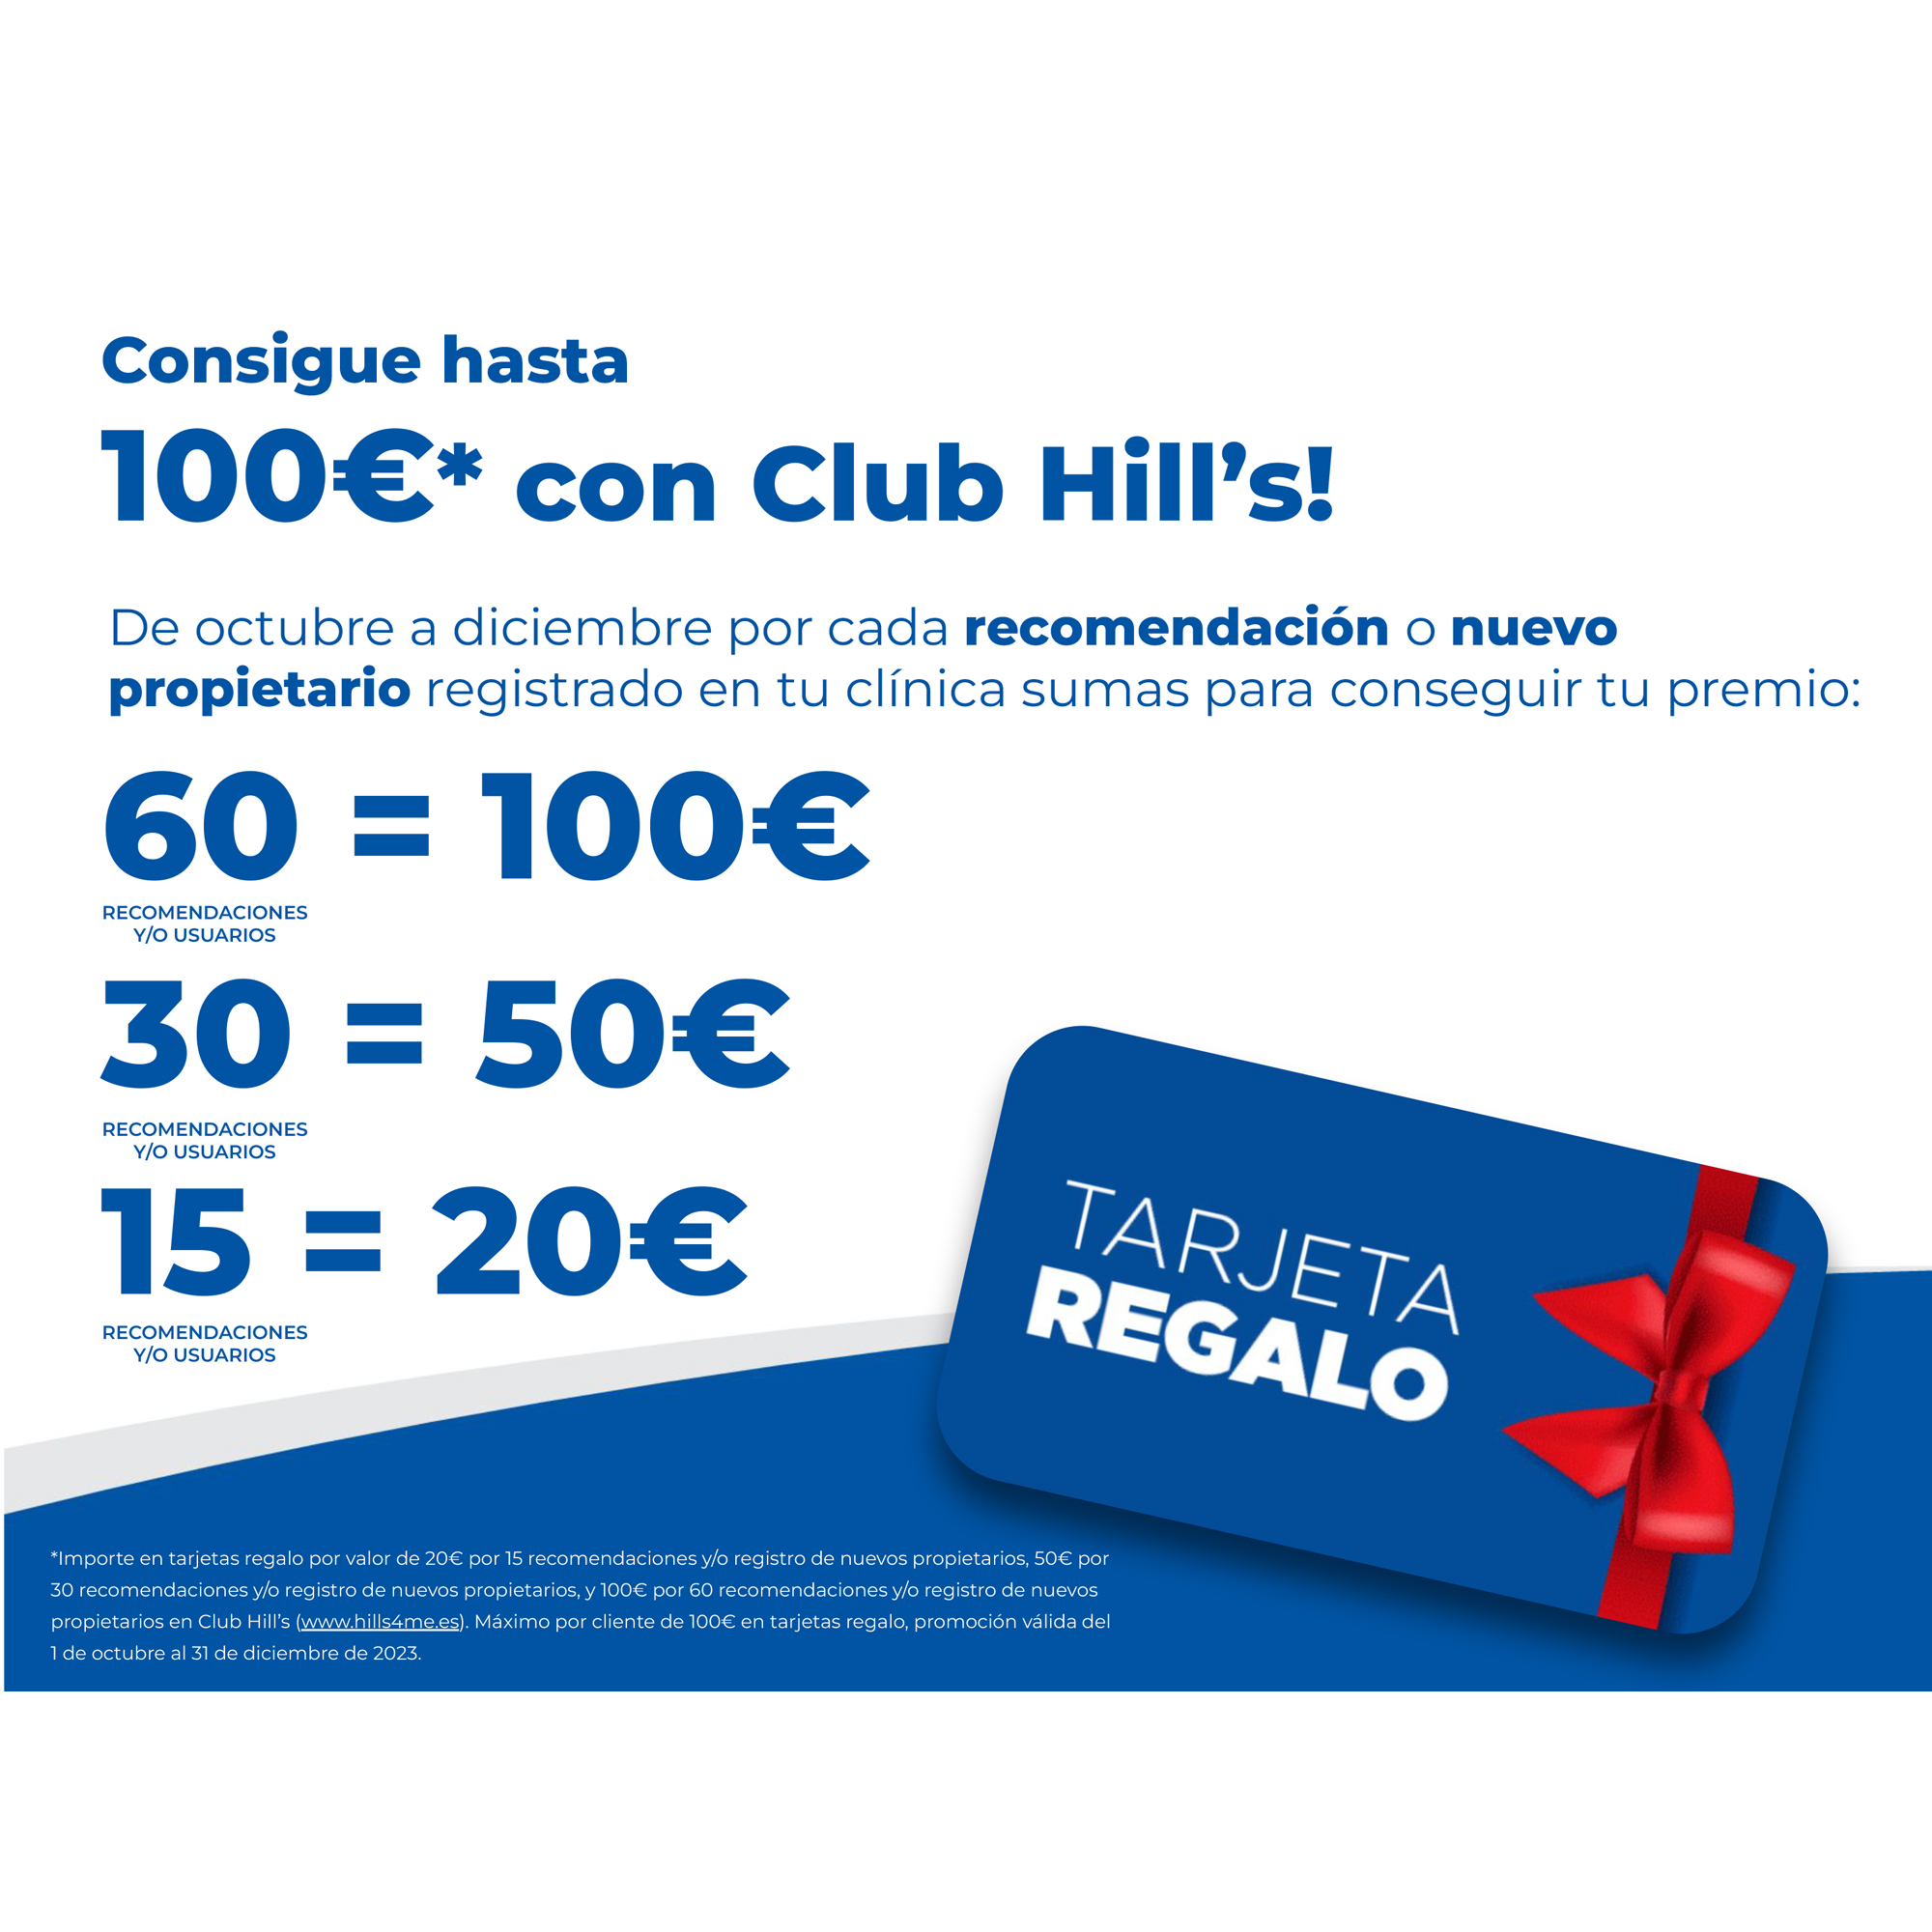 Consigue hasta 100€* con Club Hill’s!